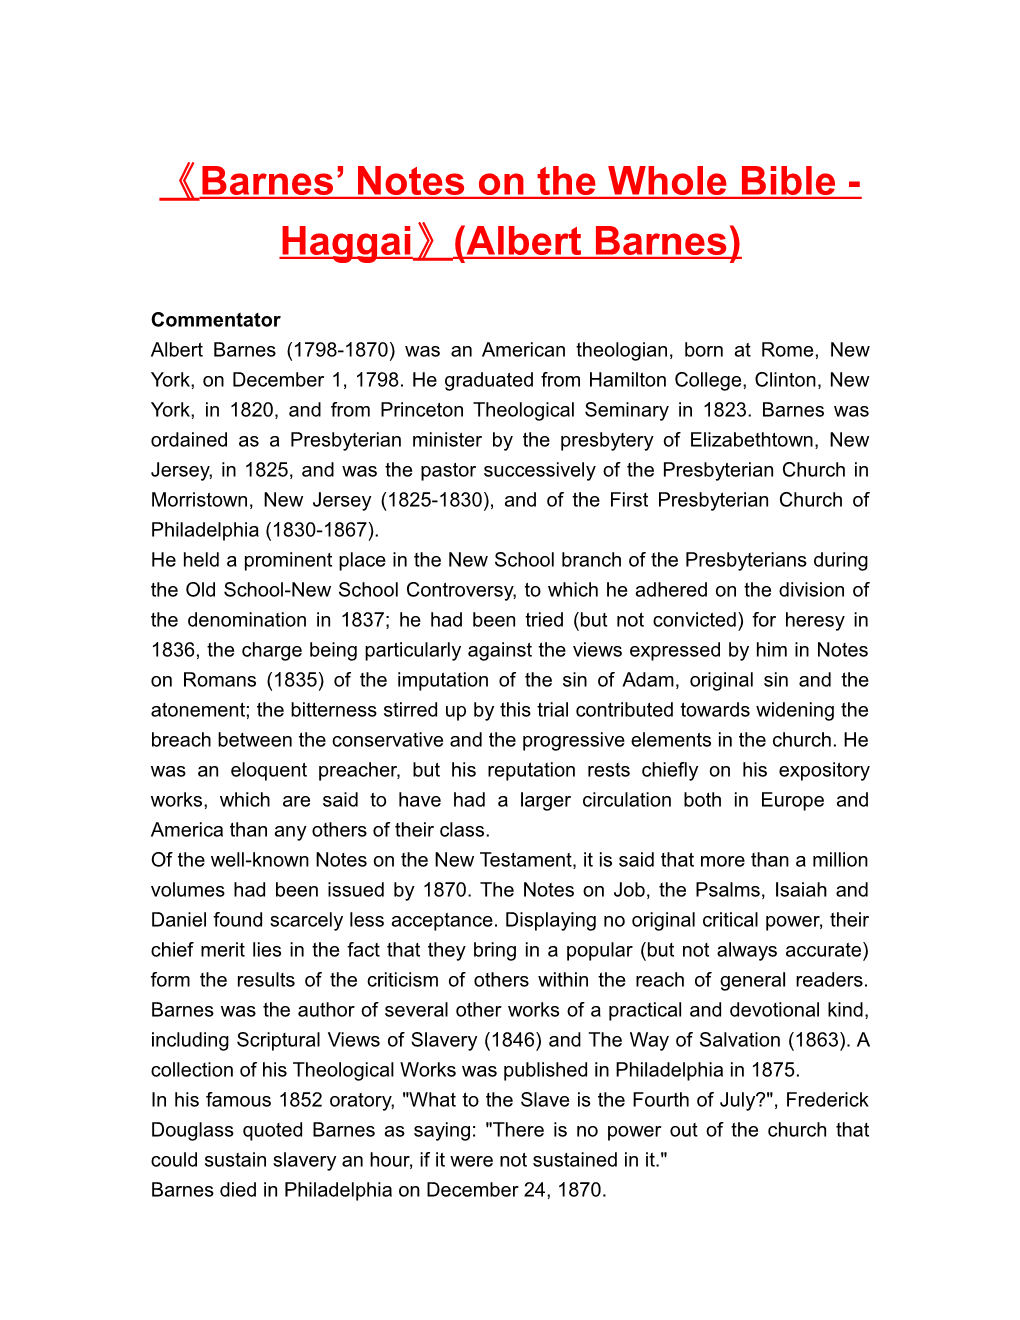 Barnes Notes on the Whole Bible - Haggai (Albert Barnes)